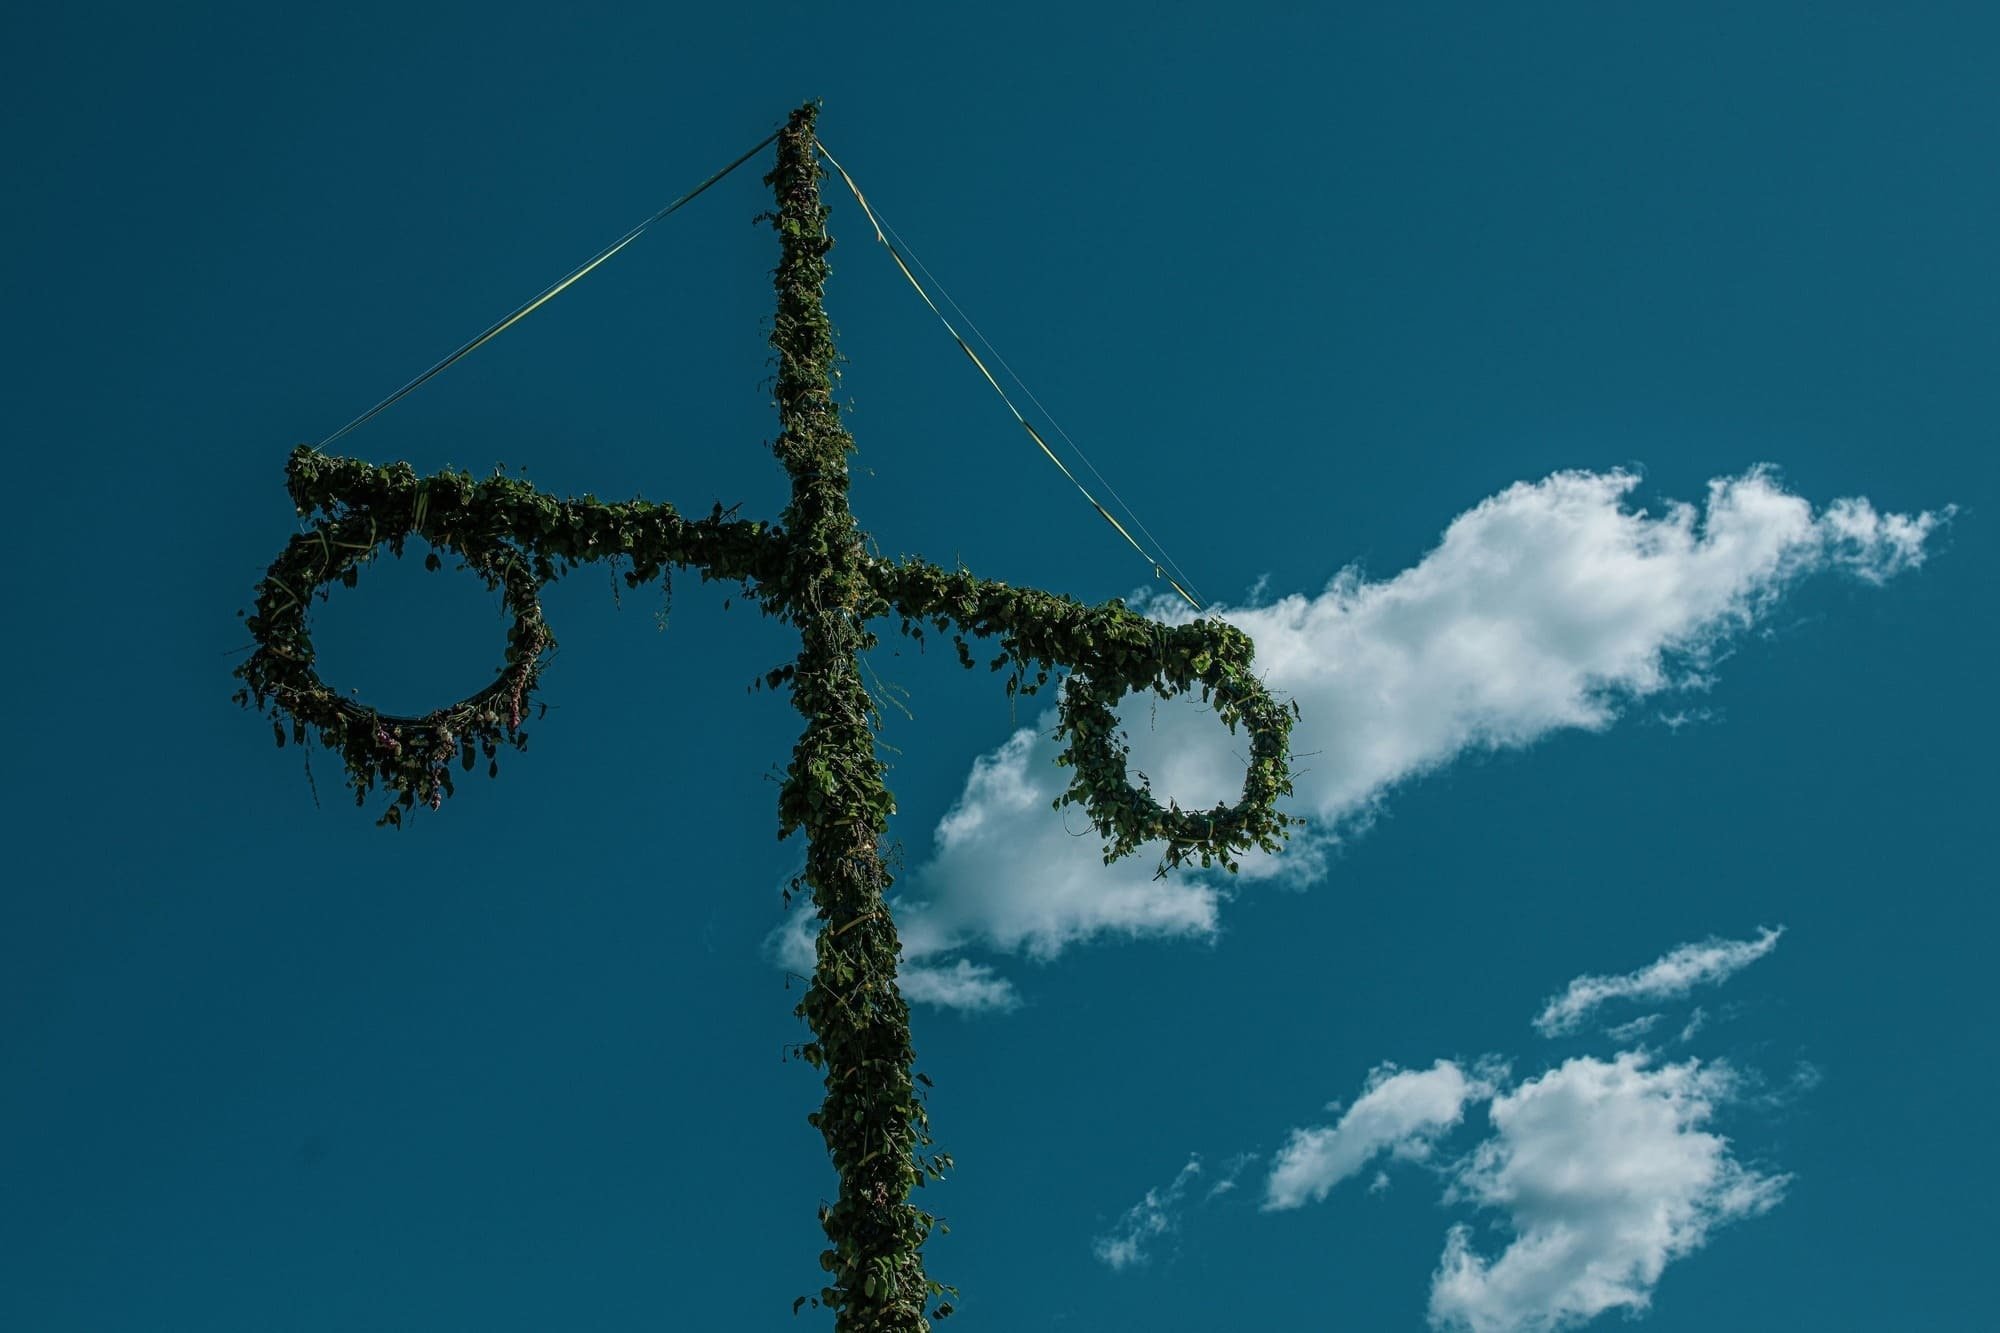 a cross with wreaths on it against a blue sky